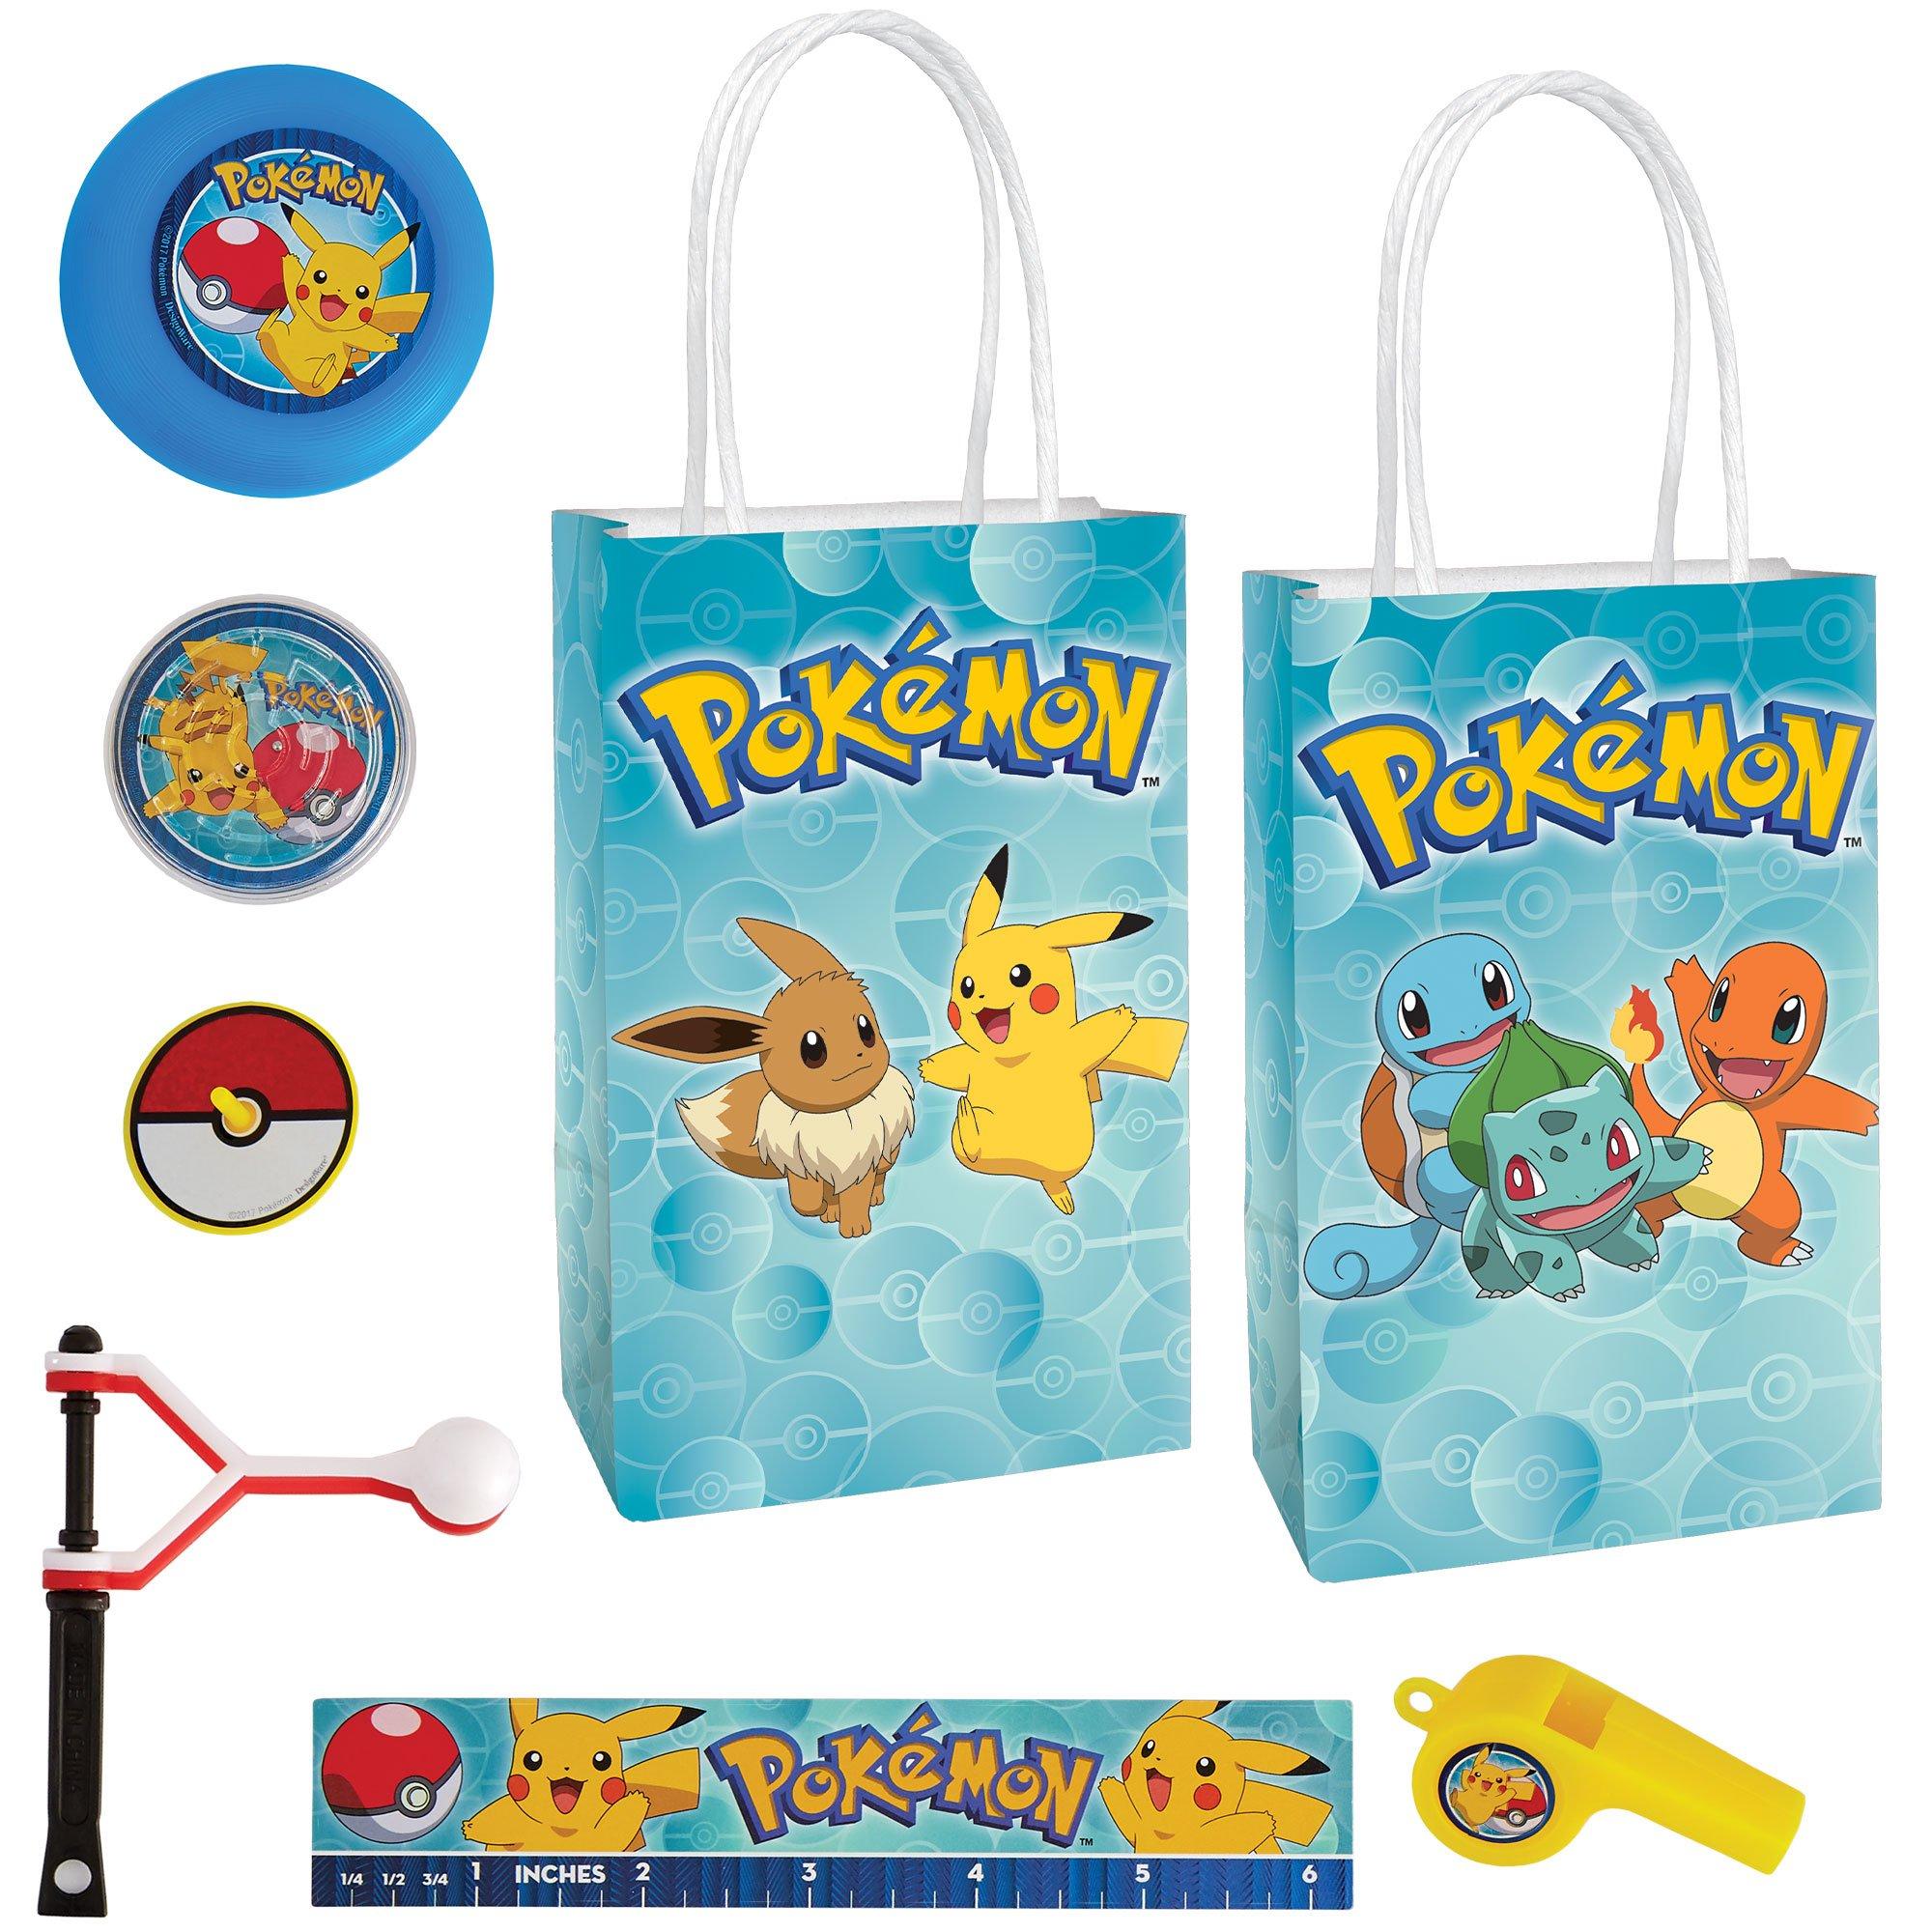 Pokémon Basic Party Favor Supplies Pack for 8 Guests - Kit Includes Favor Pack & Favor Bags